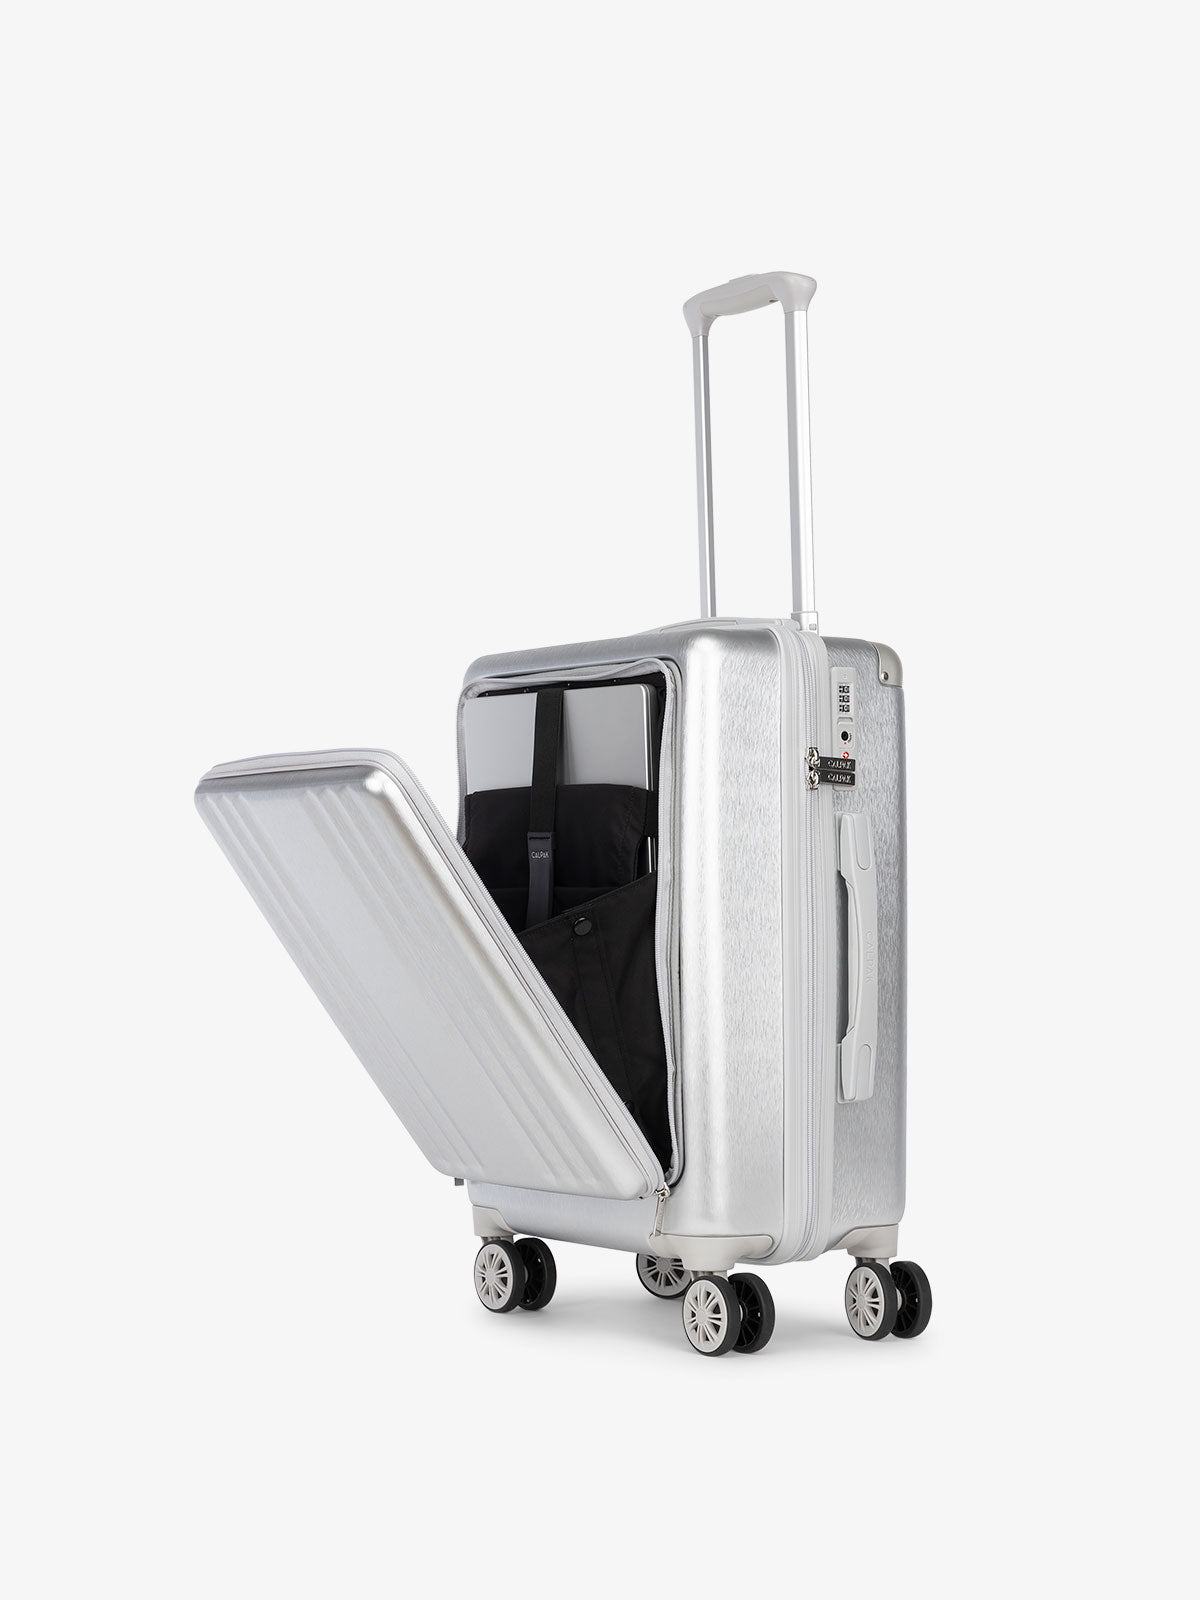 CALPAK Ambeur front pocket lightweight carry-on luggage in sliver